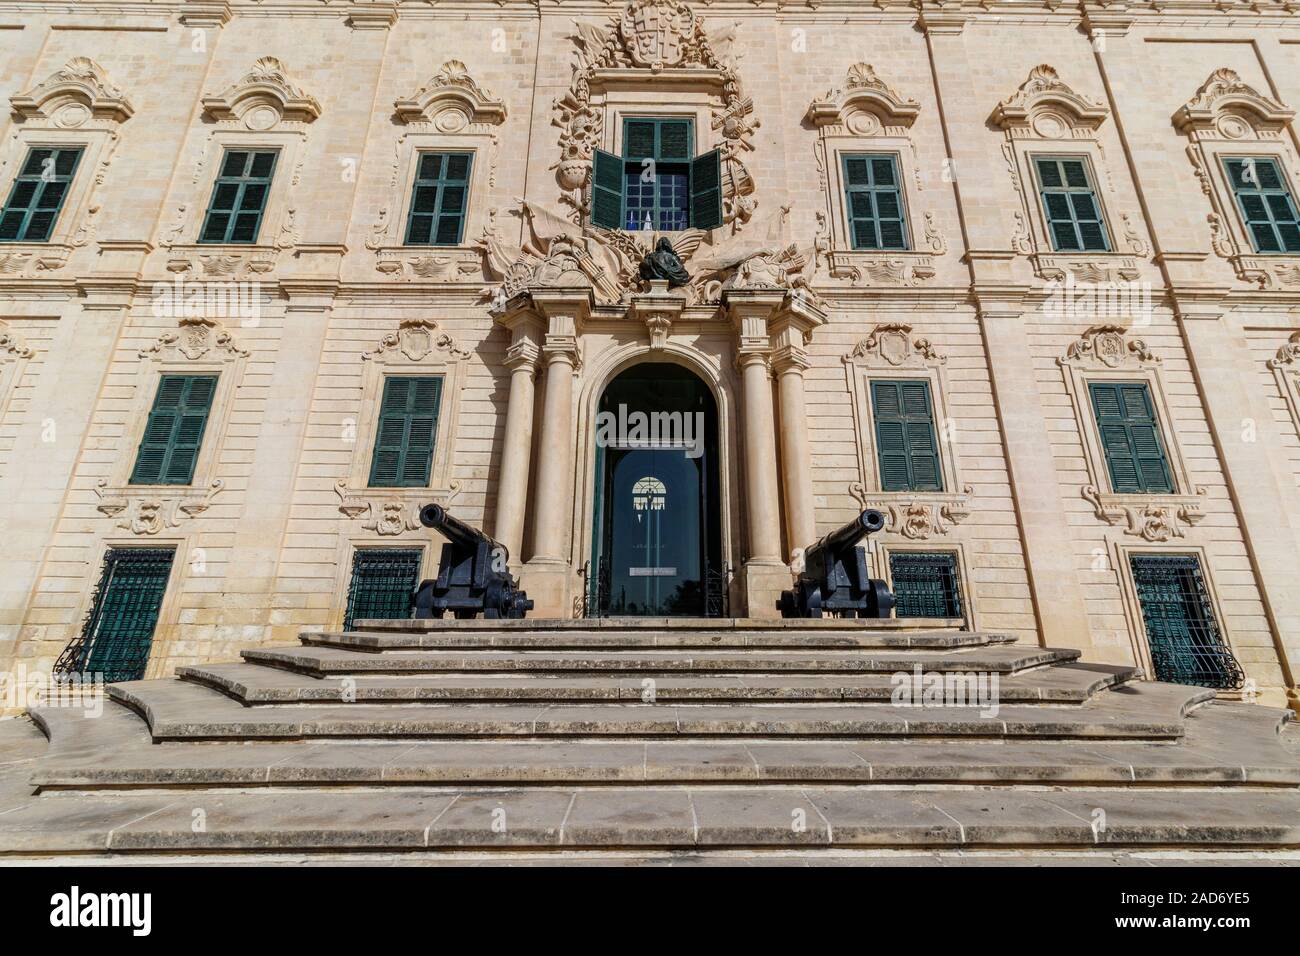 The 1740's Baroque style Auberge de Castille in Castille Place, Valletta, Malta. Offices of the Maltese Prime Minister. Stock Photo